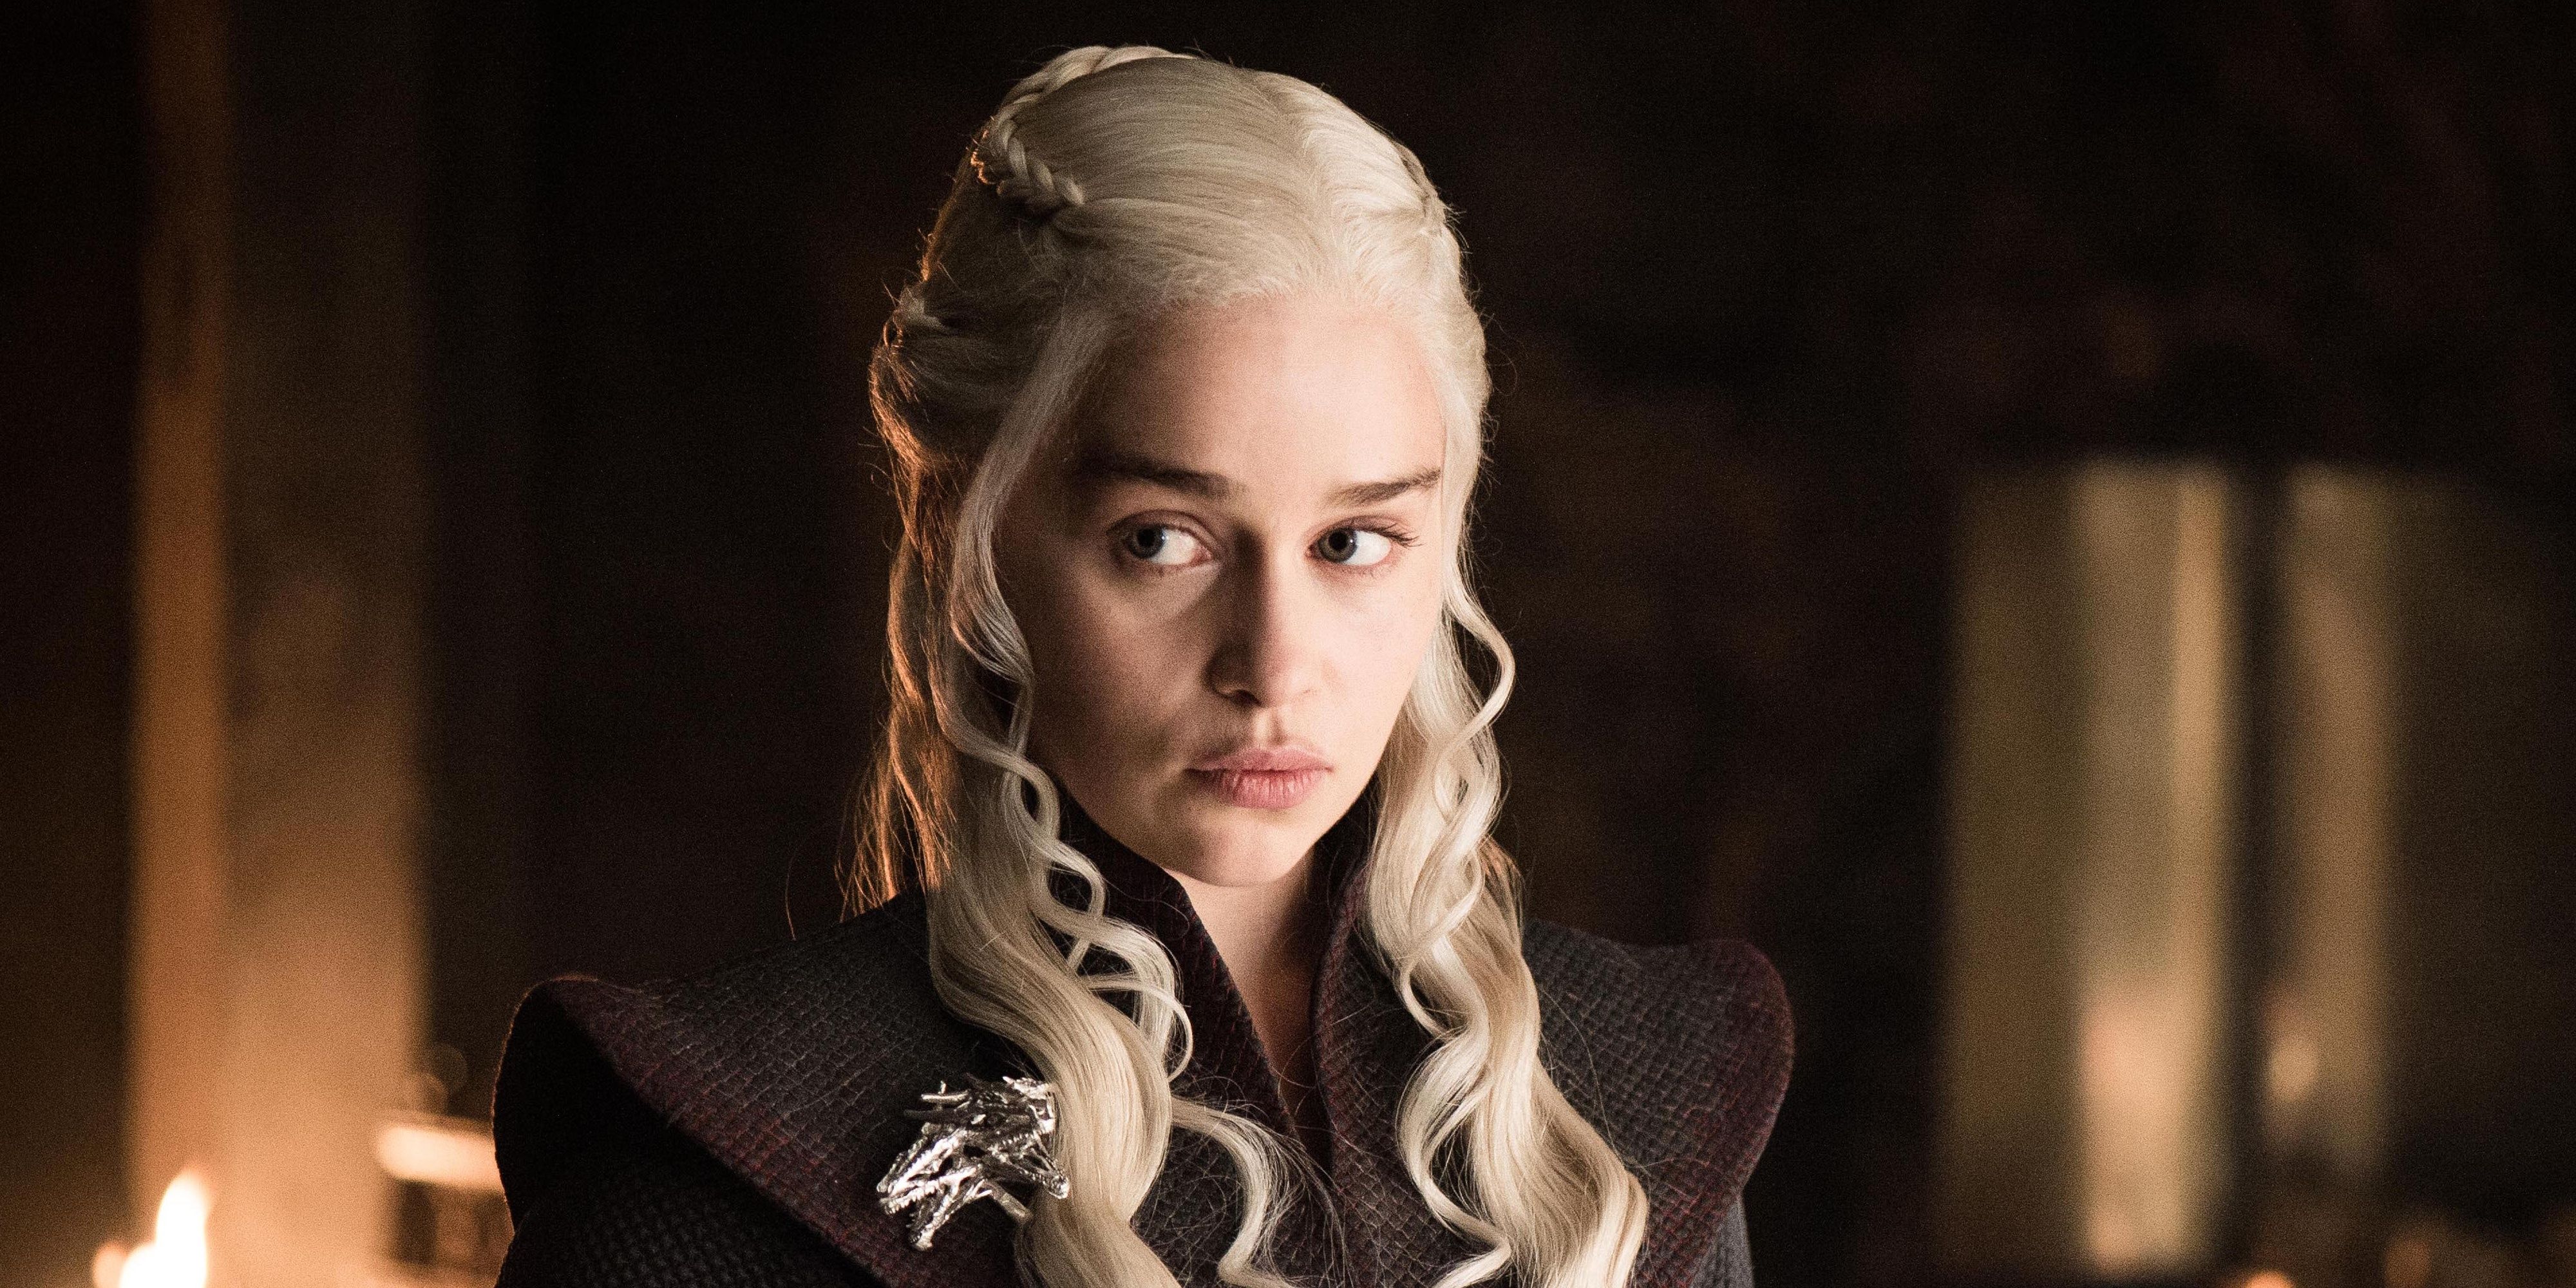 Daenerys Targaryen Vs Sansa Stark Who Should Have Been Queen Of Westeros